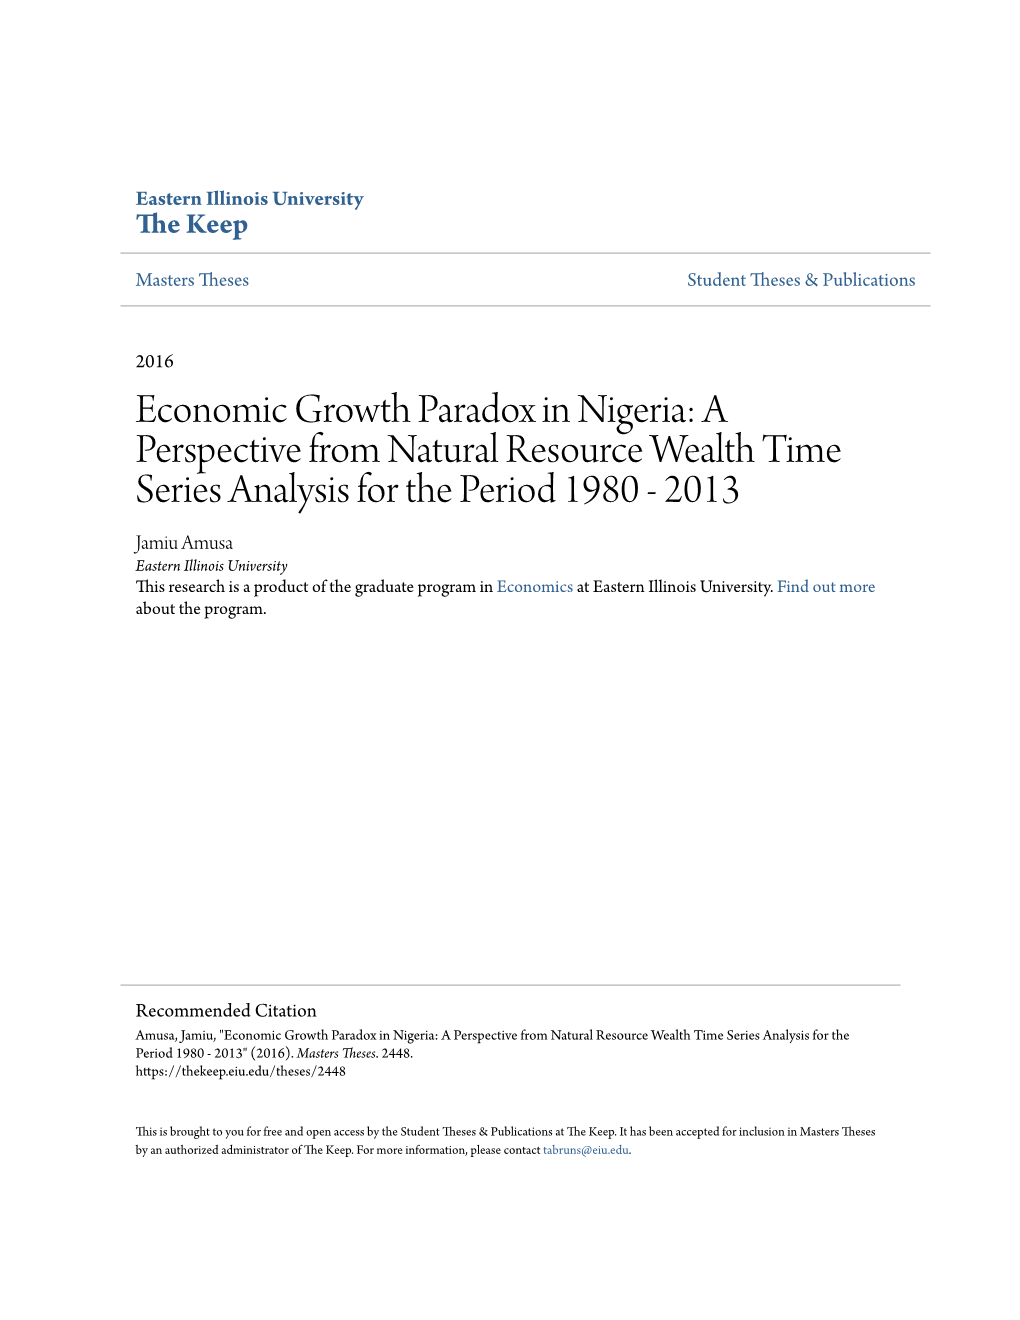 Economic Growth Paradox in Nigeria